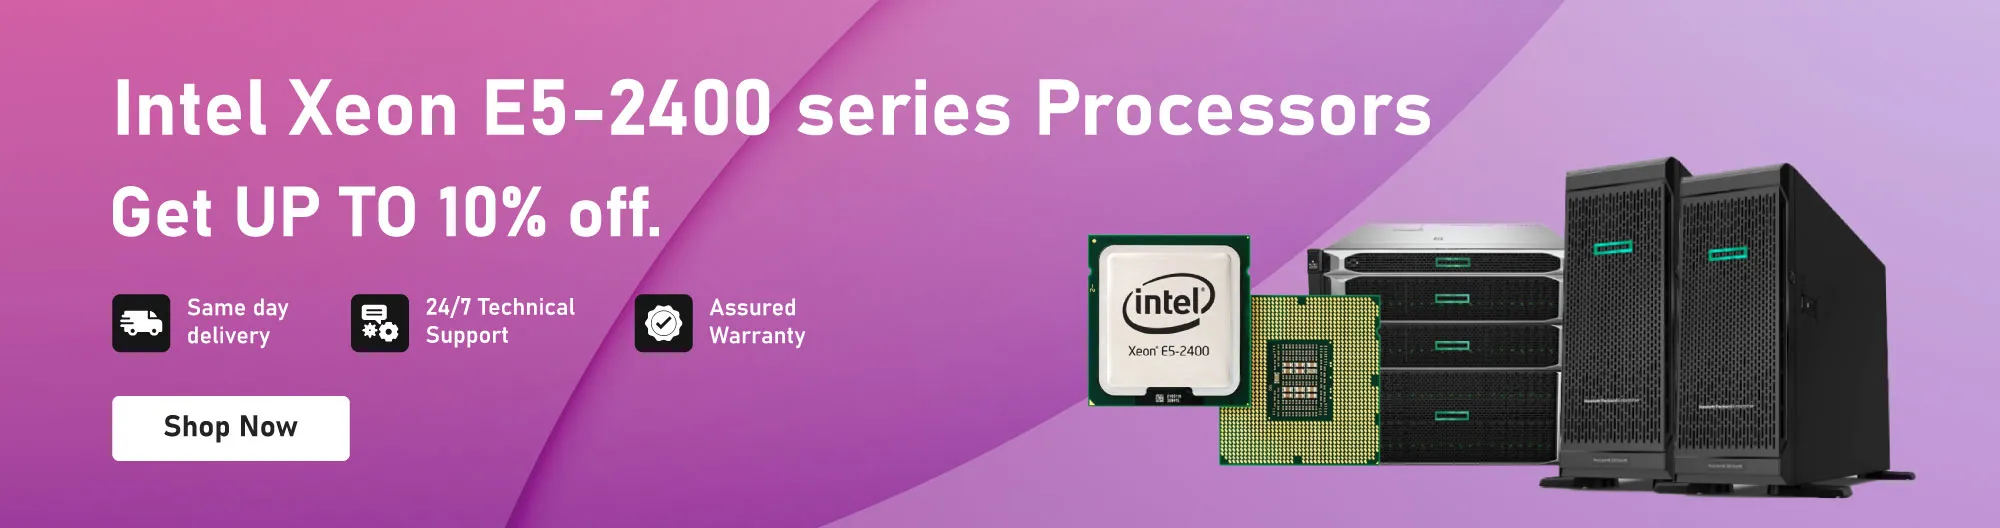 Intel Xeon E5-2400 series Processors